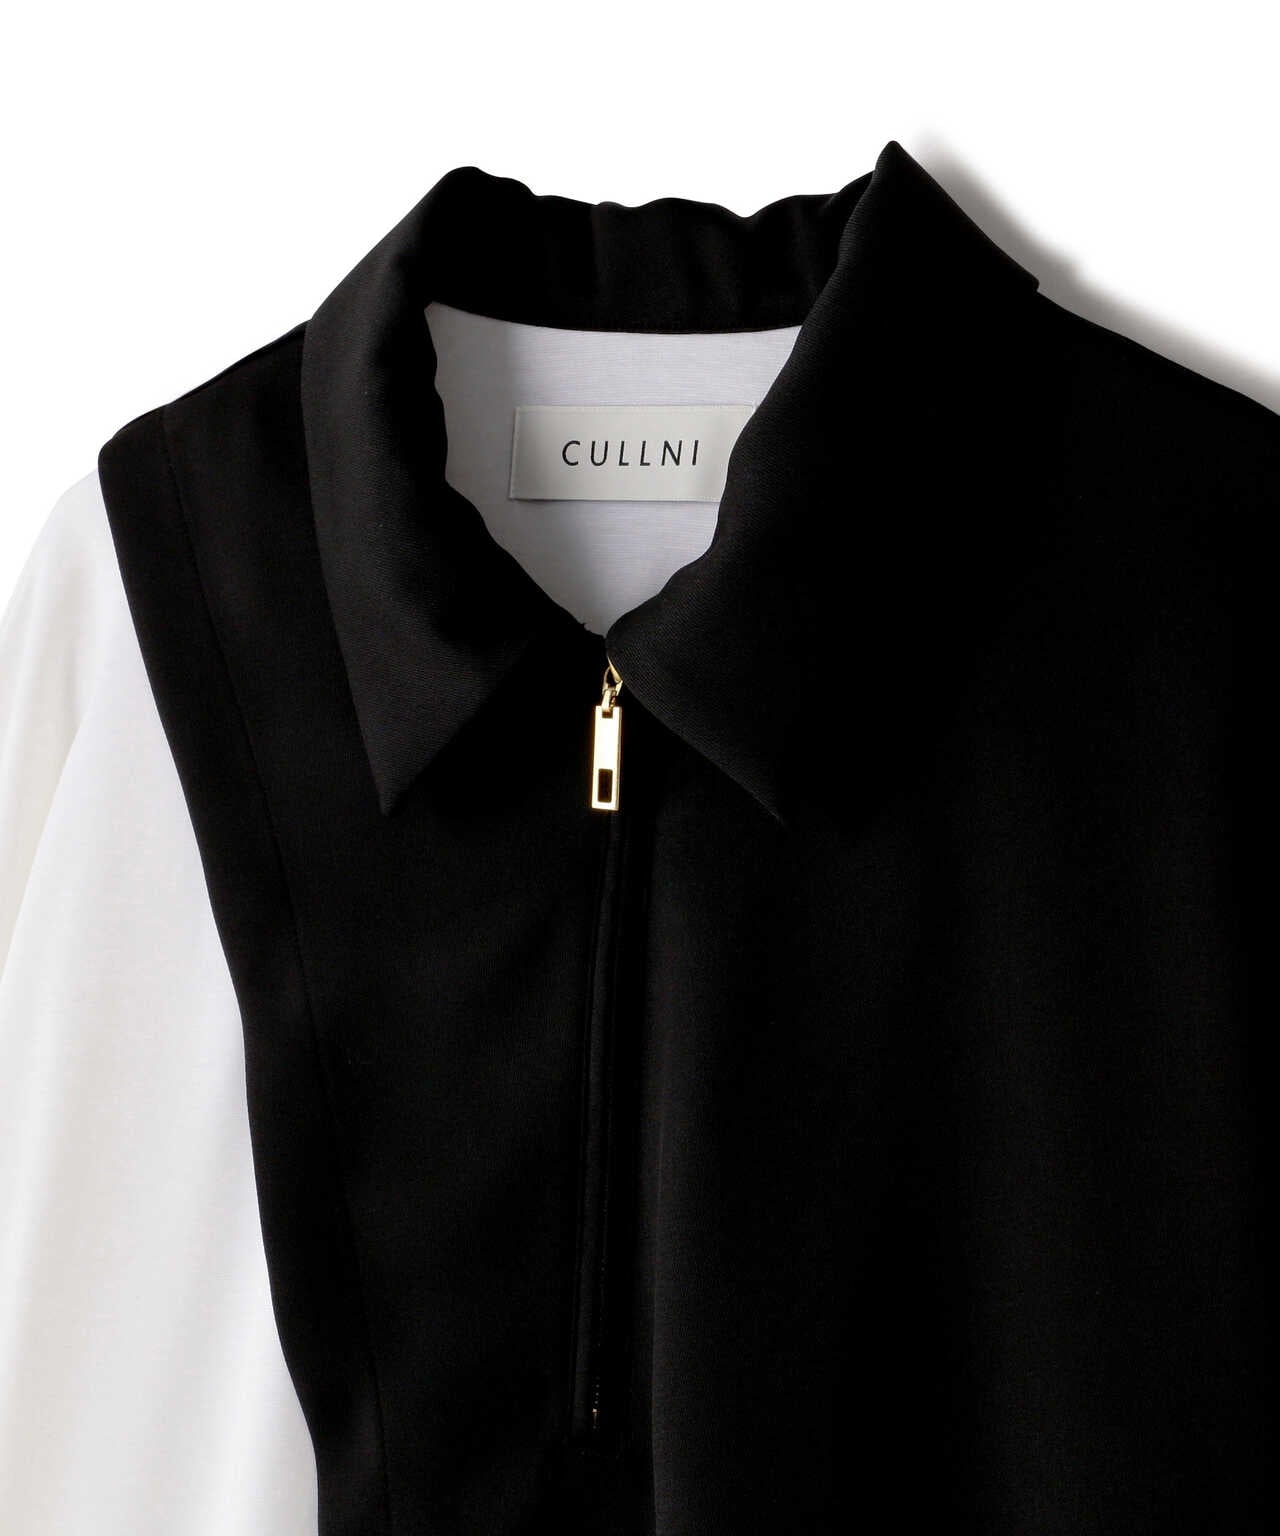 CULLNI/クルニ/コンビネーションハーフジップシャツ/22-AW-028 | LHP 